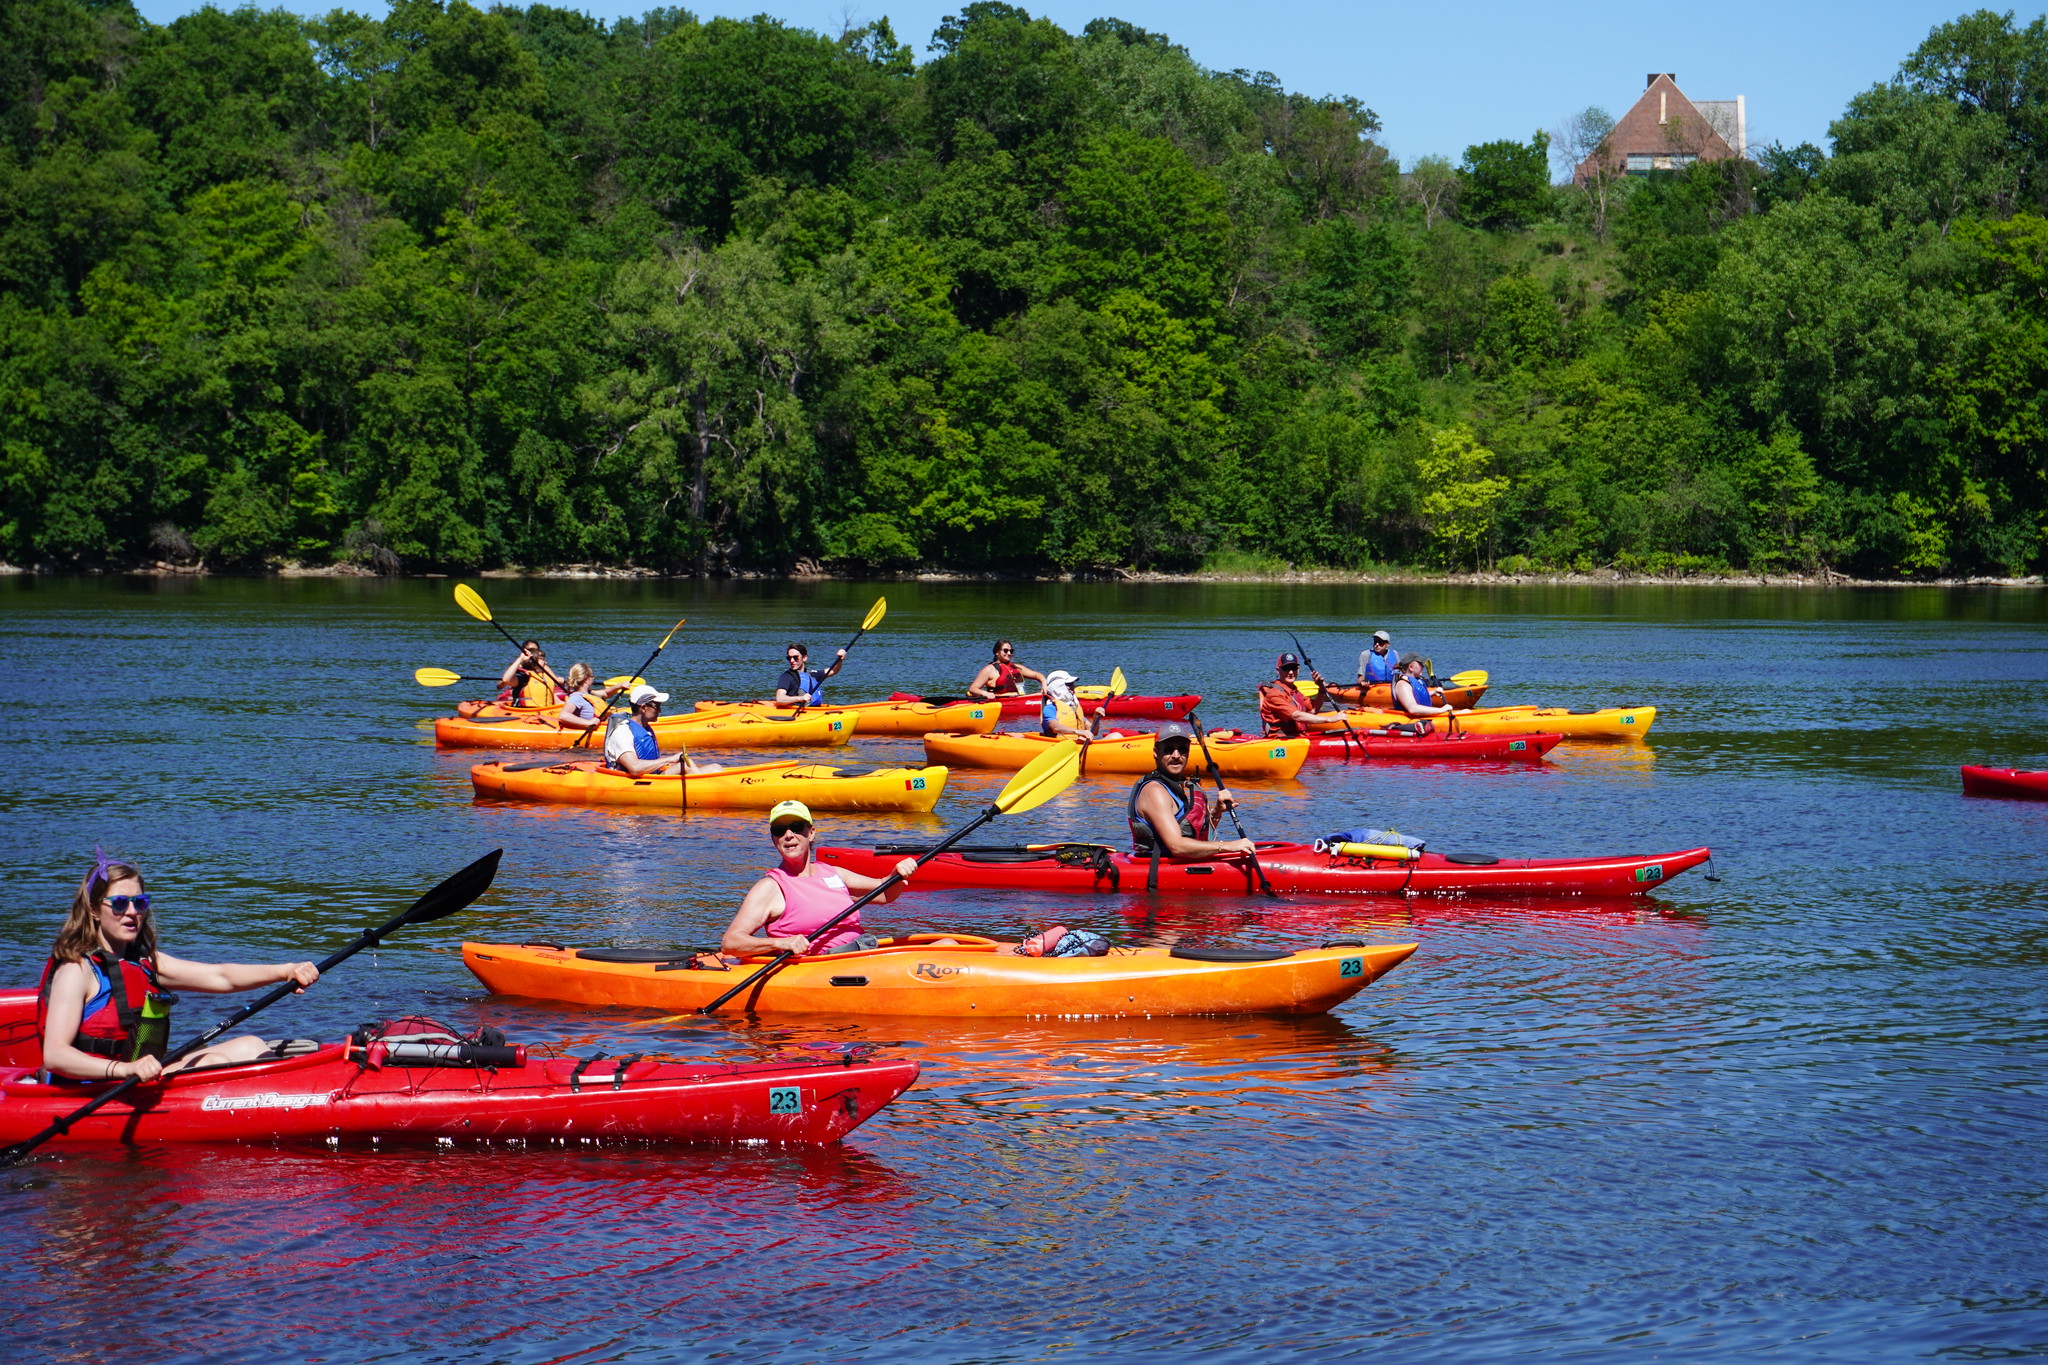 People paddling kayaks in the river